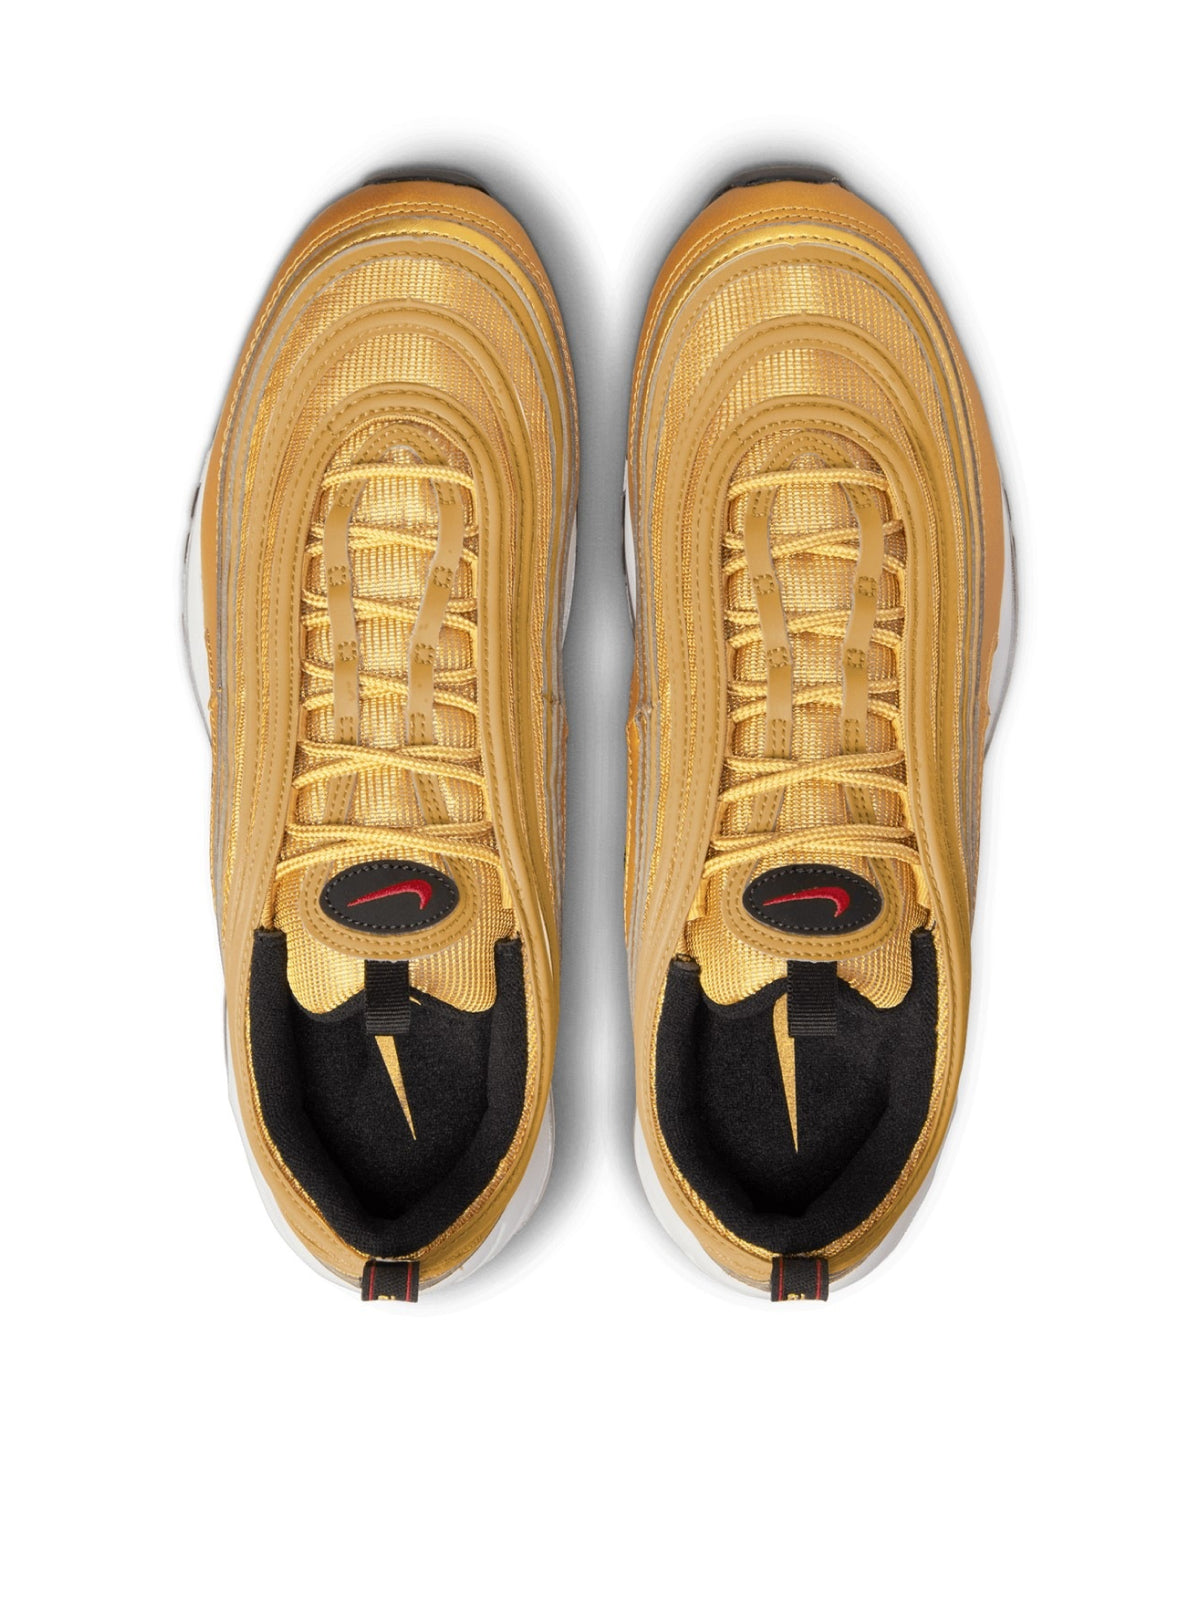 Air Max 97 OG Golden Bullet Sneakers